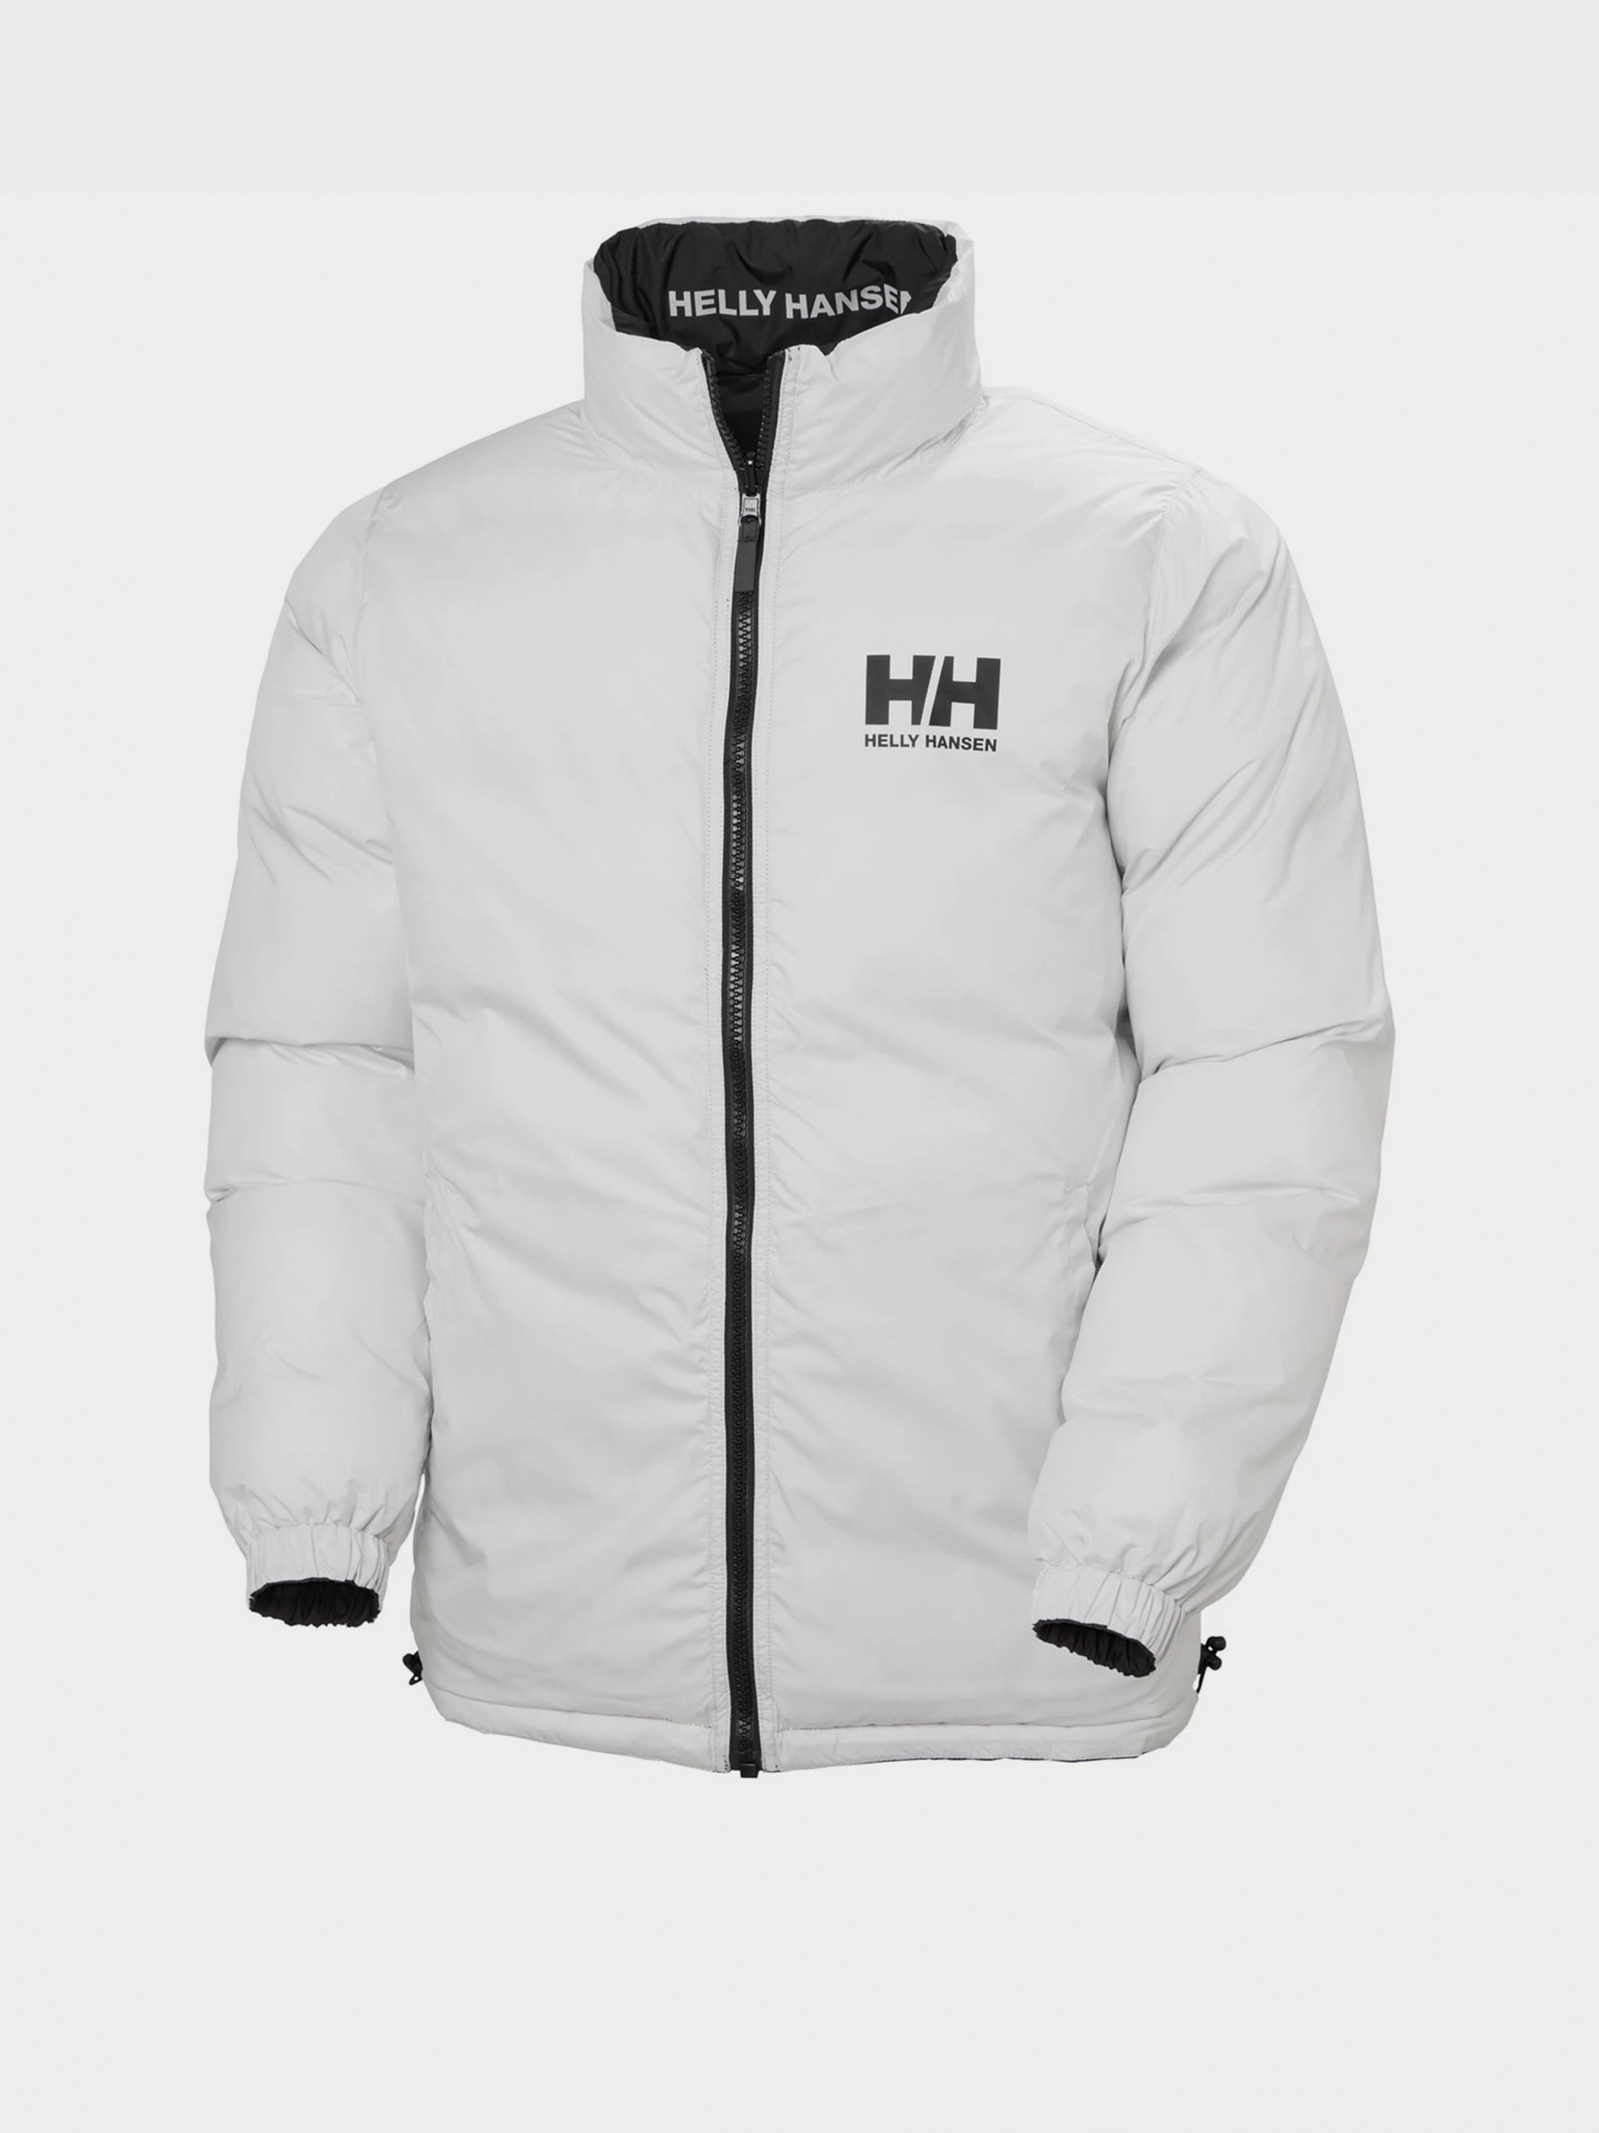 Helly Hansen Urban Reversible Jacket Black - 29656-990